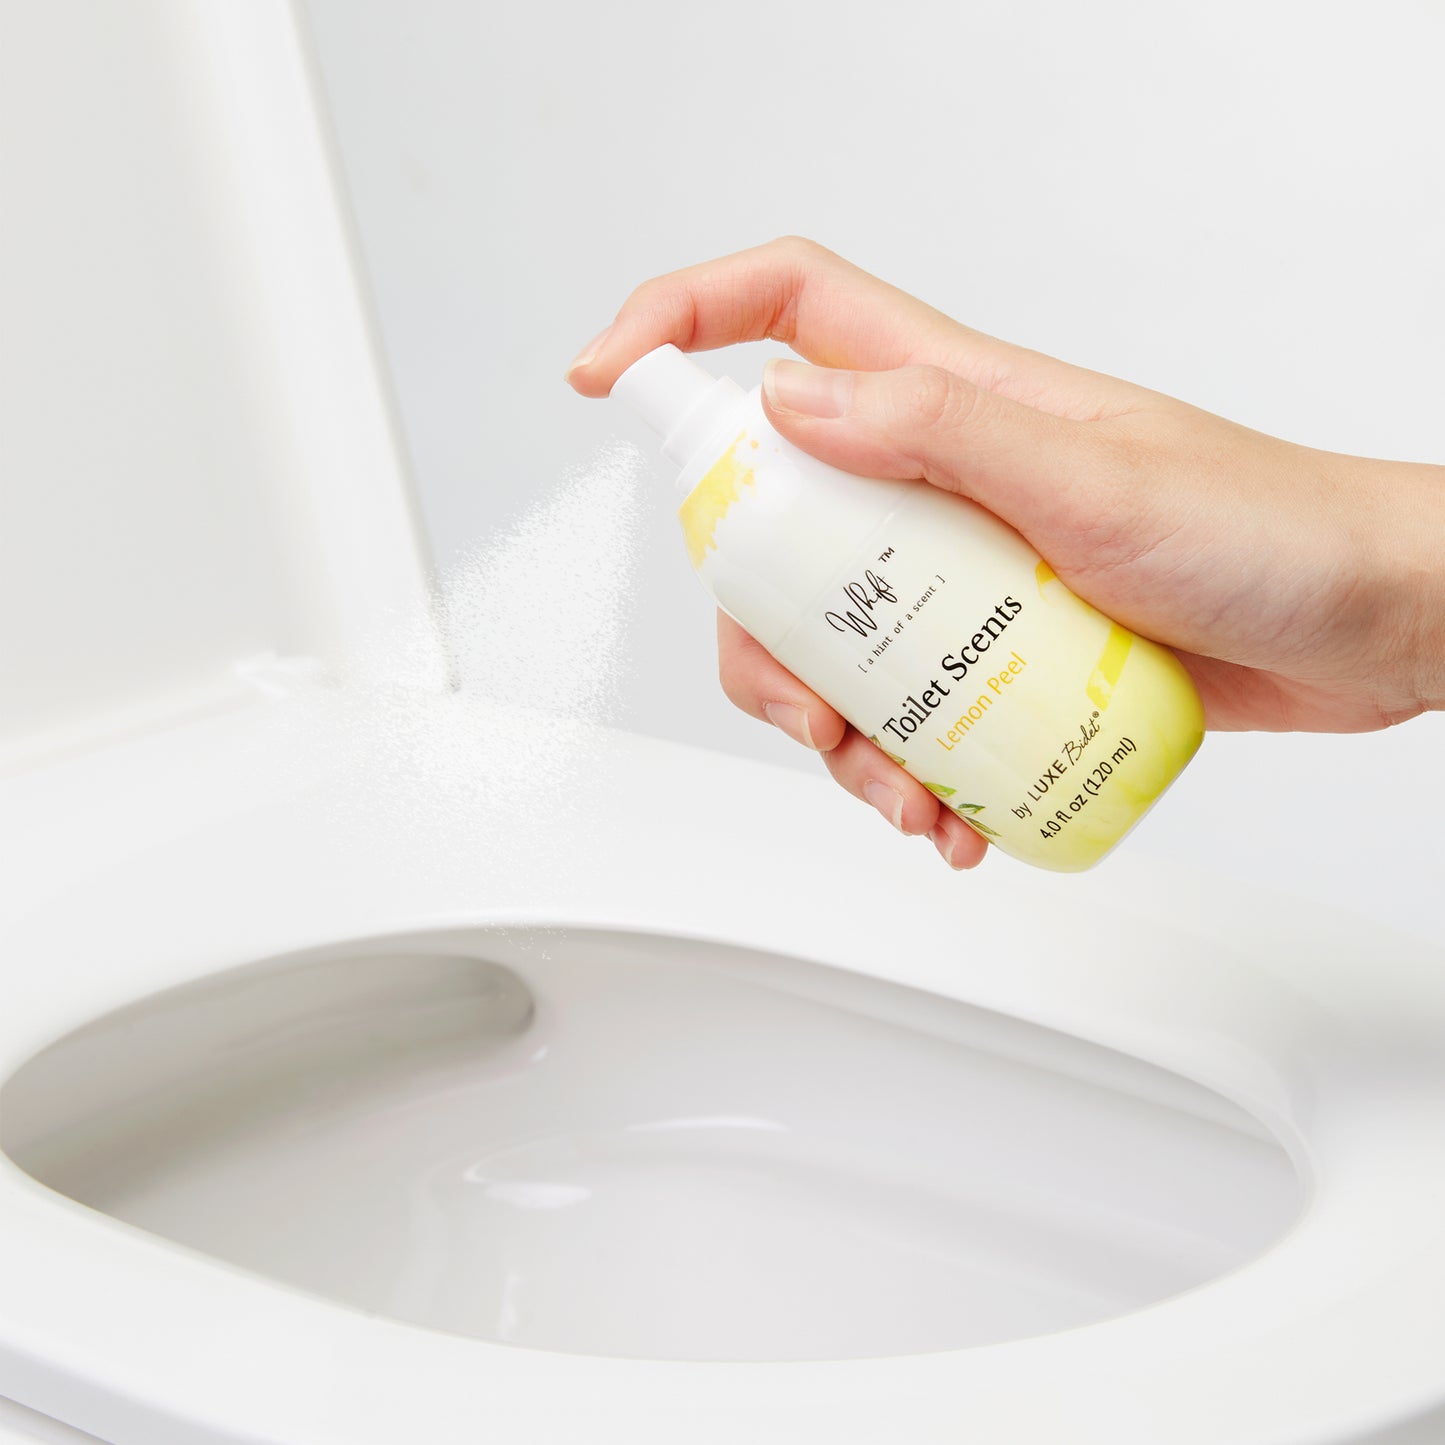 Hand spraying Lemon Peel Whift into the toilet